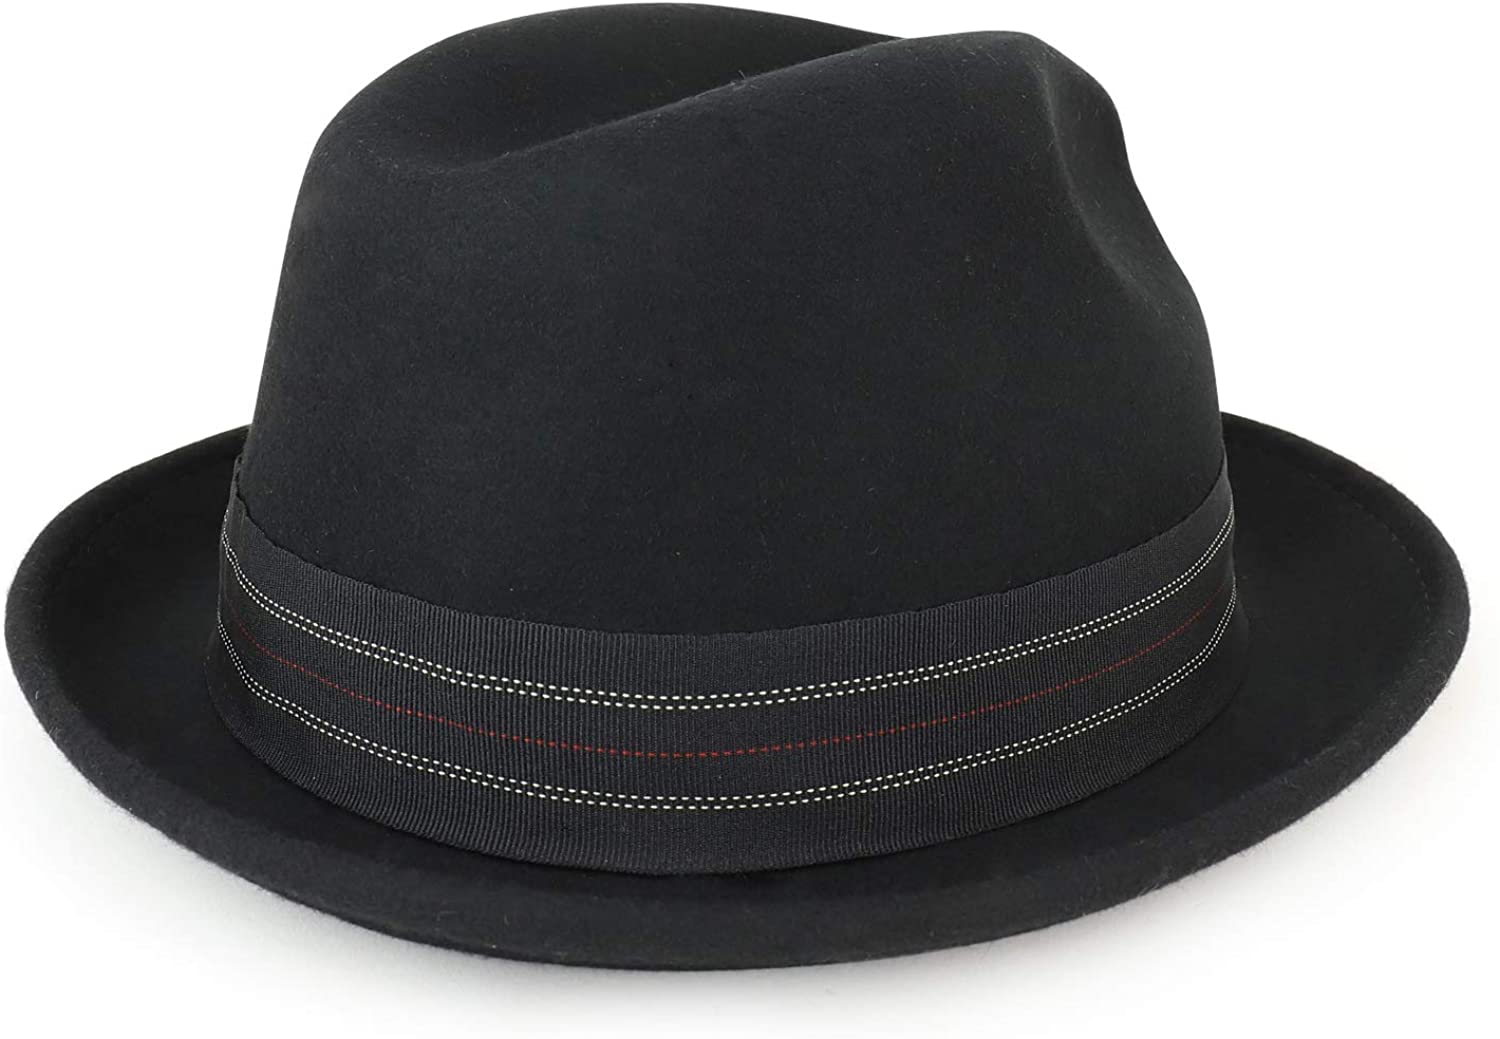 Armycrew XXL Oversize Wool Felt Pinch Fedora Hat with Stripe Band